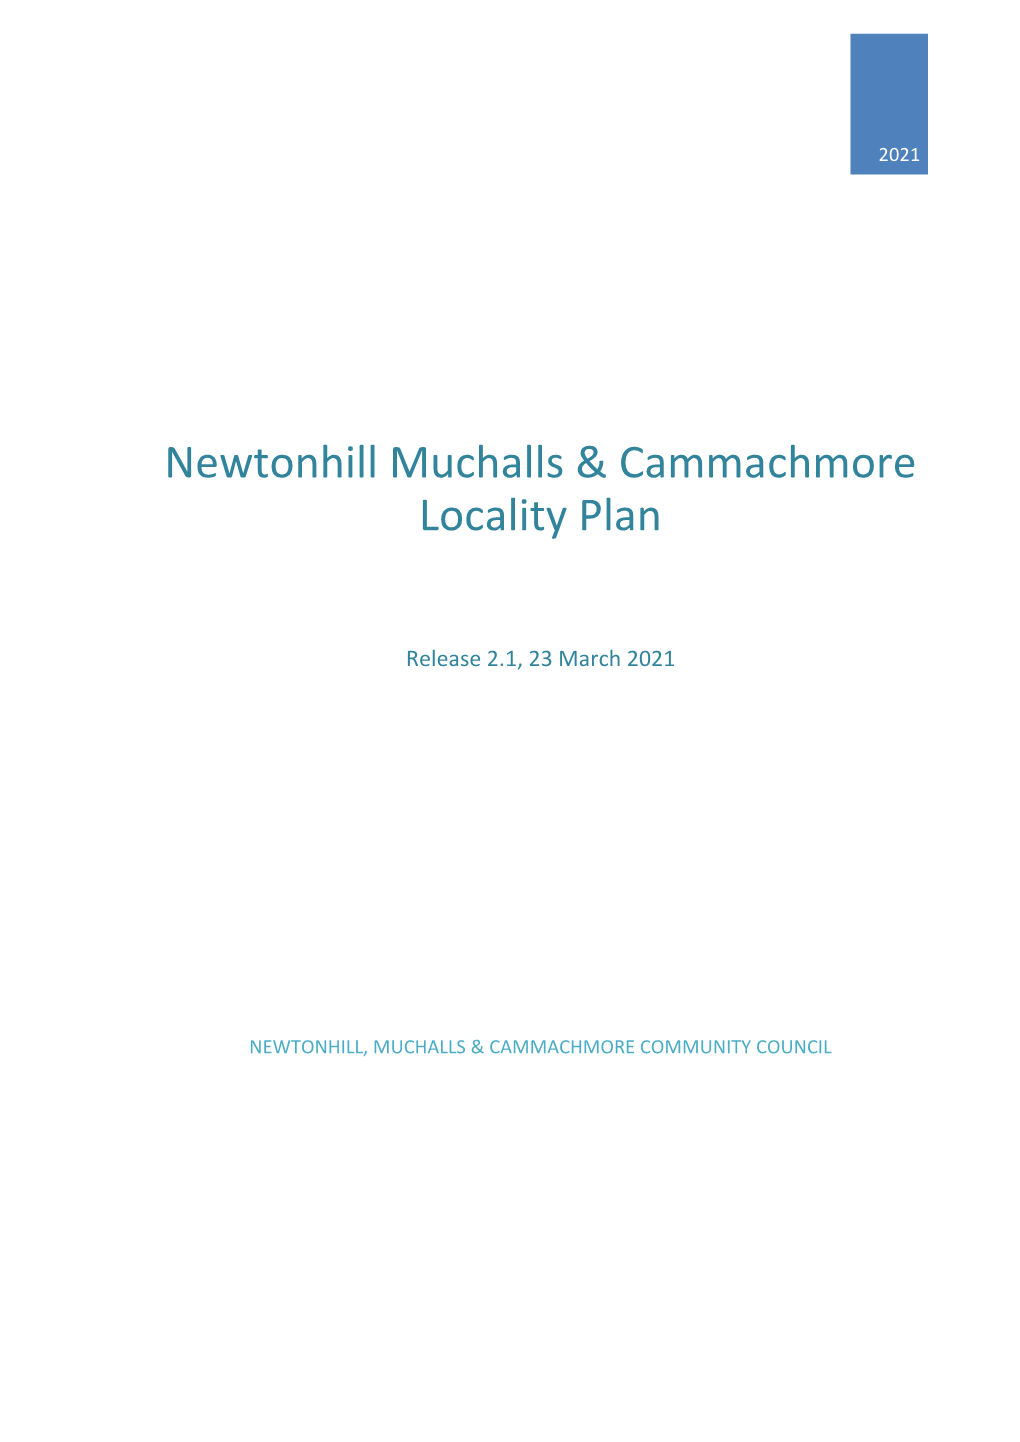 Newtonhill Muchalls & Cammachmore Locality Plan